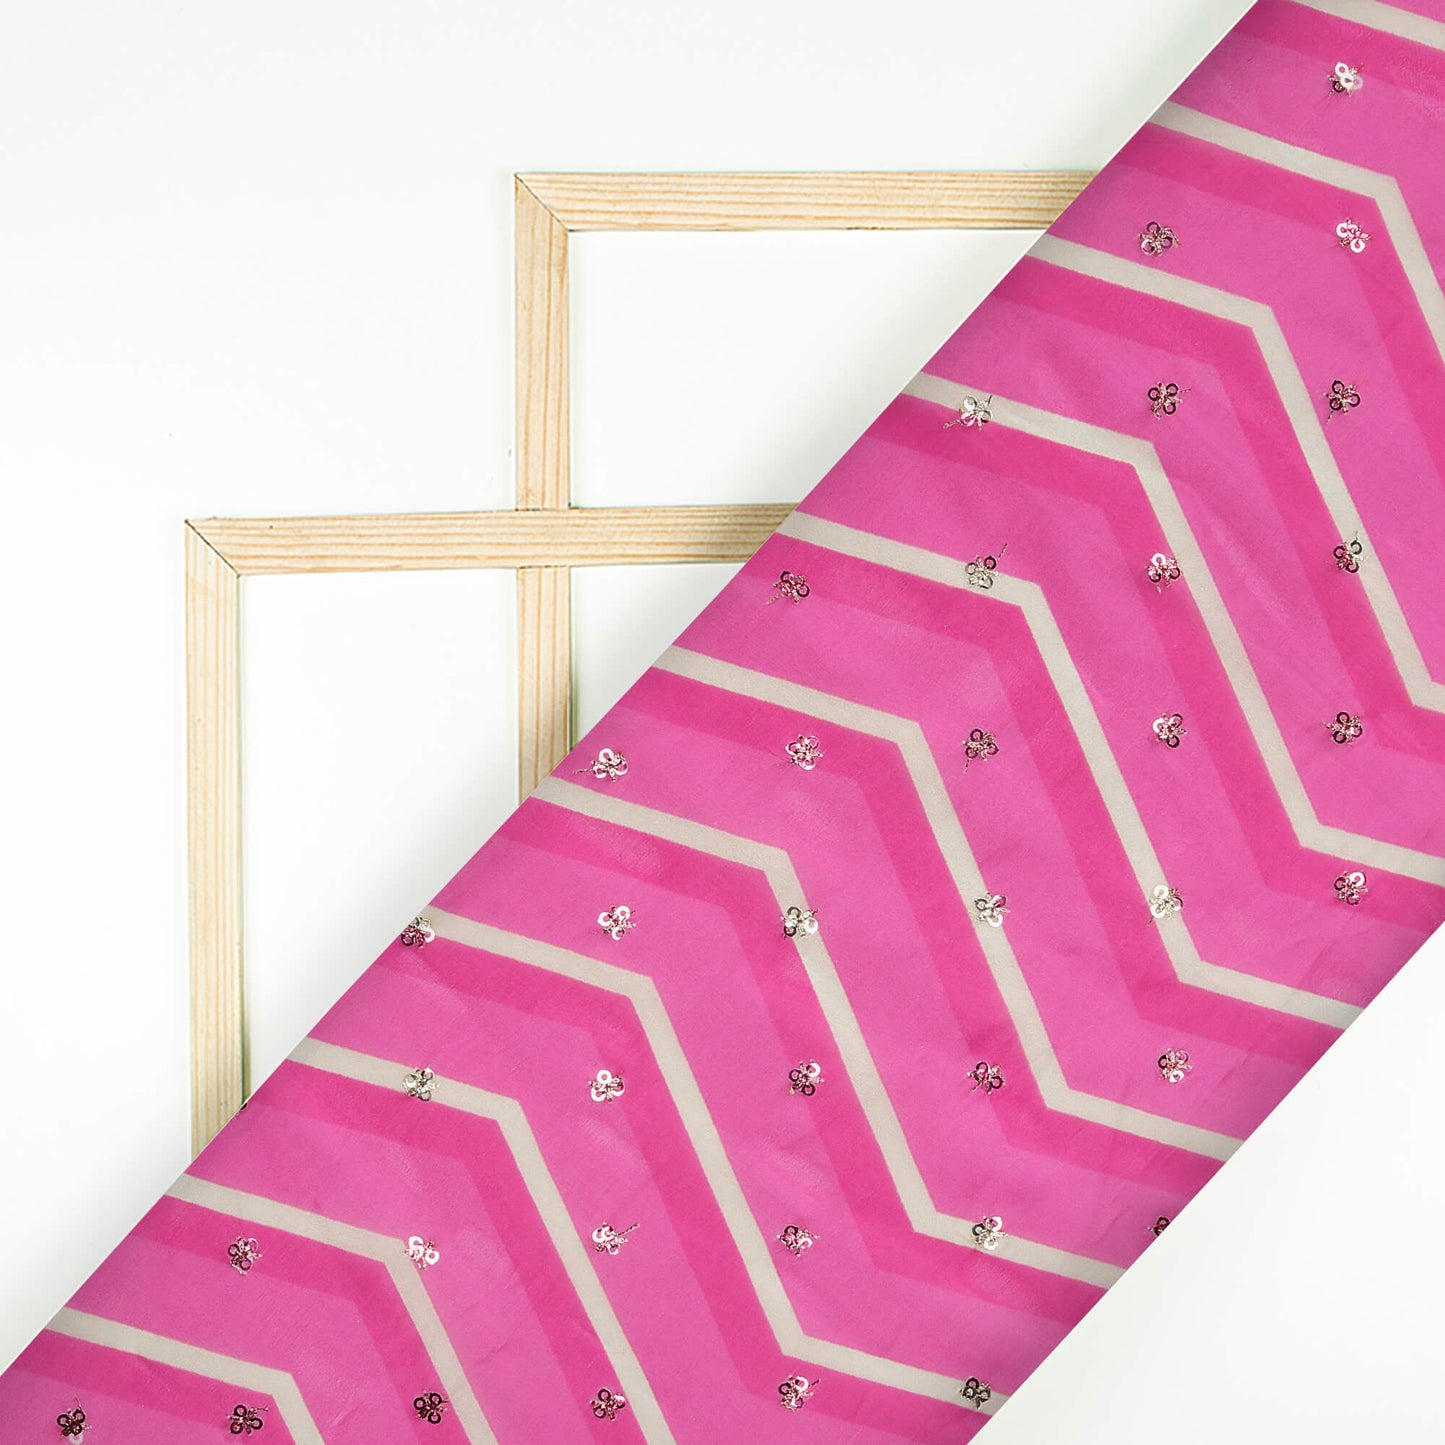 Taffy Pink And White Chevron Pattern Digital Print Booti Sequins Premium Liquid Organza Fabric